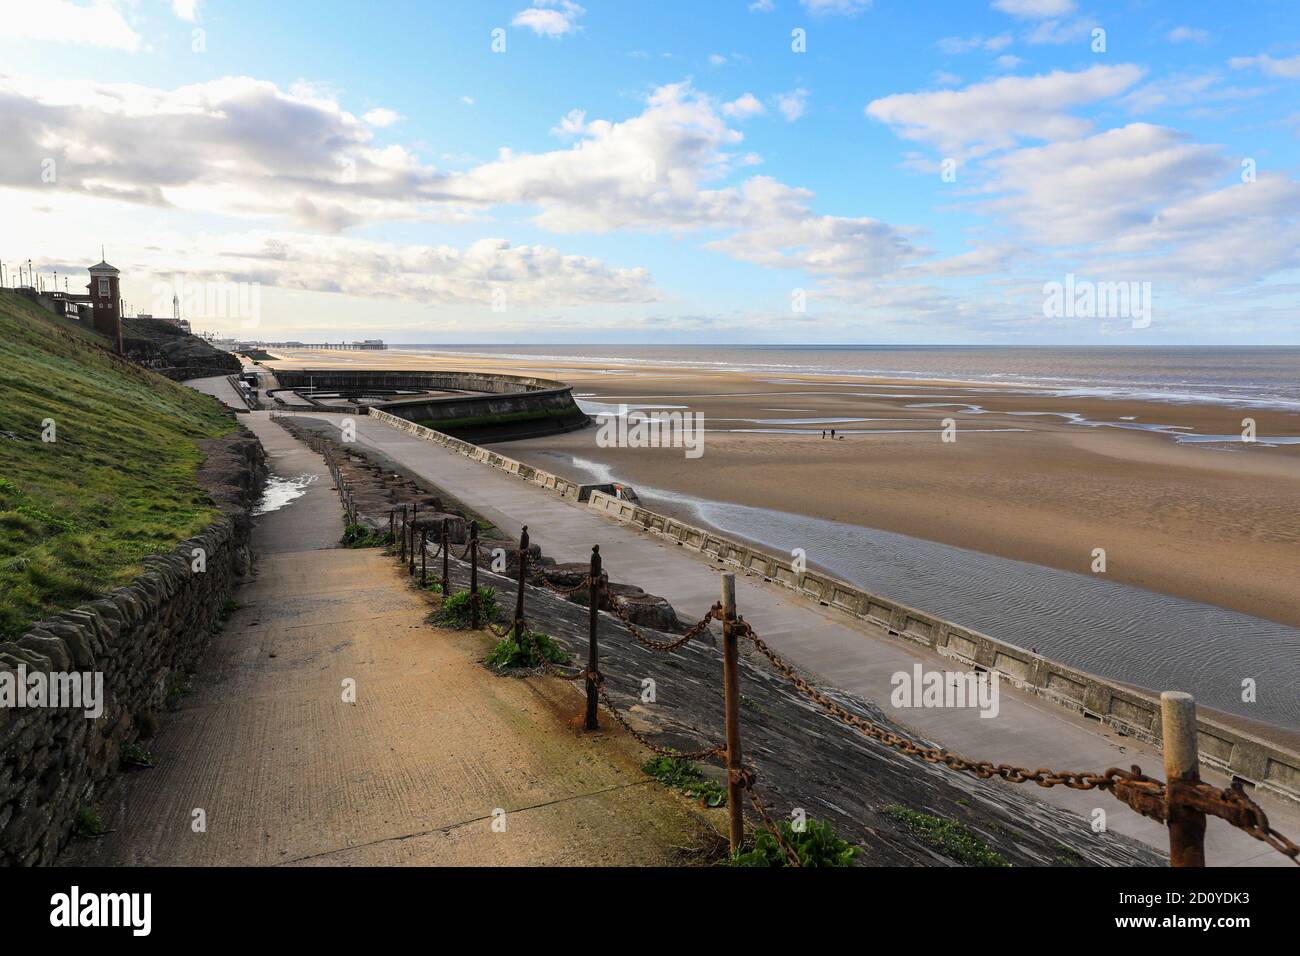 Promenade on the seafront at Blackpool, Lancashire, England, UK Stock Photo